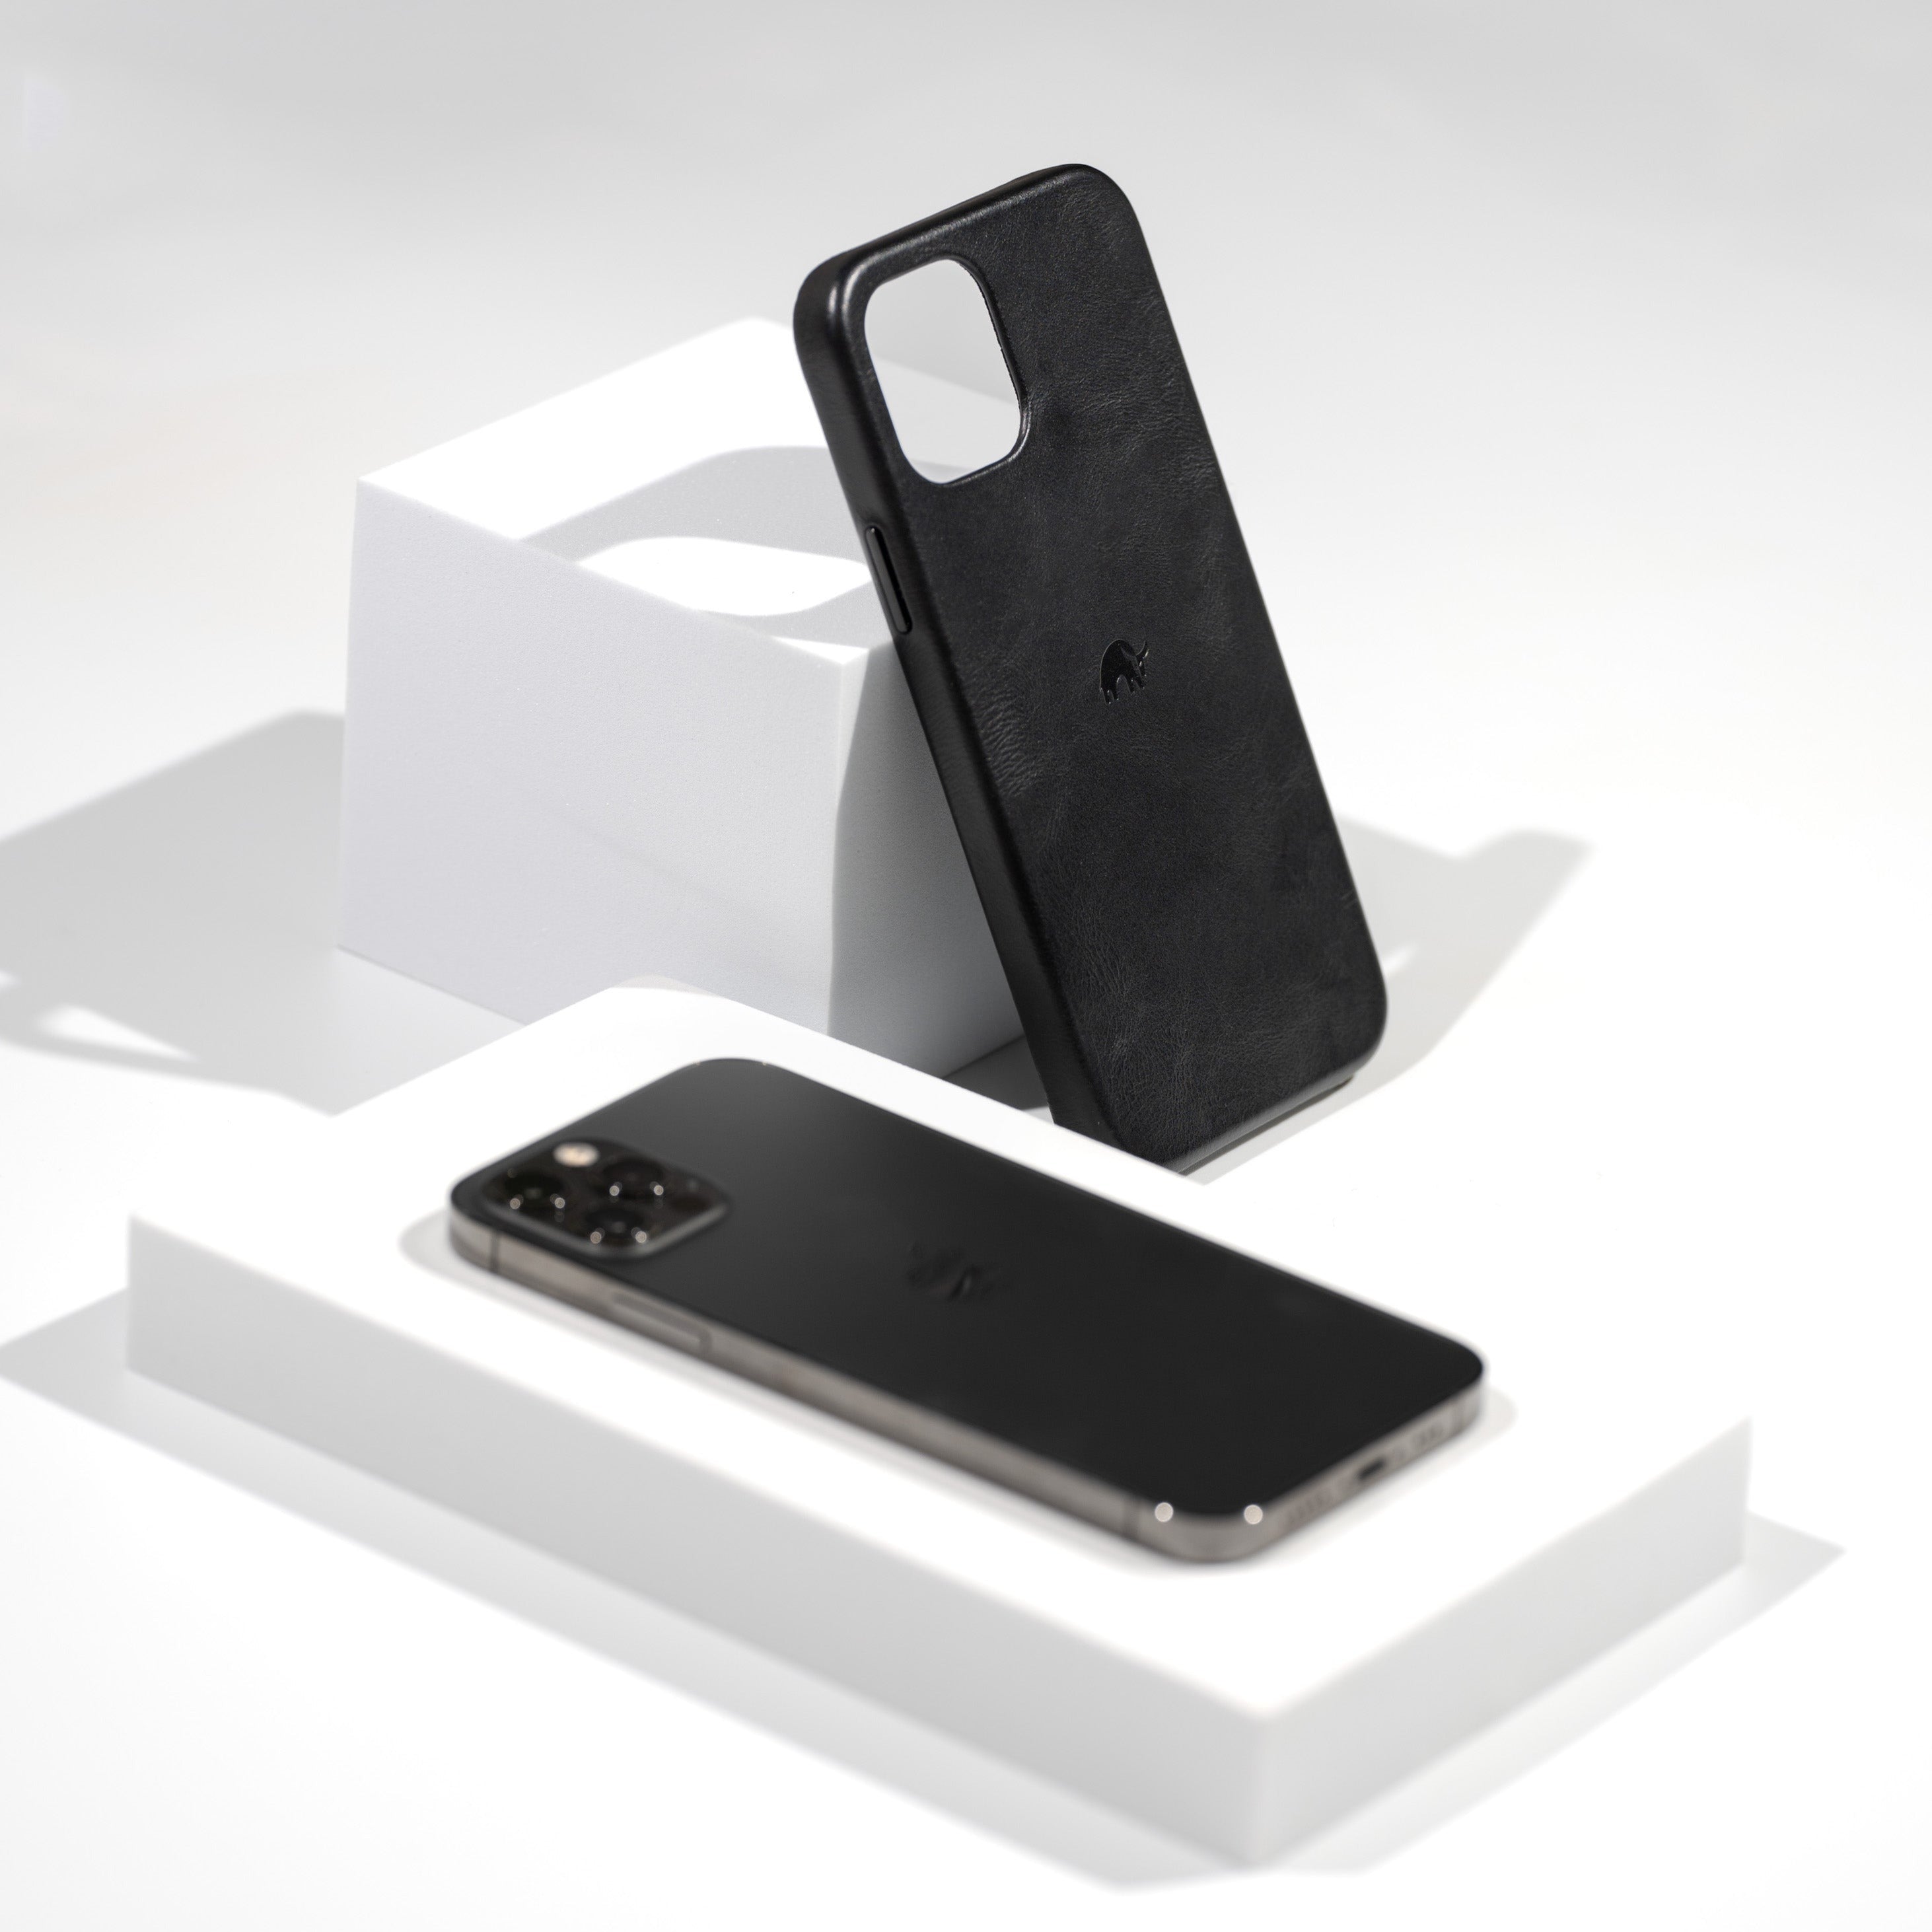 The Minimalist MagSafe Case - BLACK EDITION